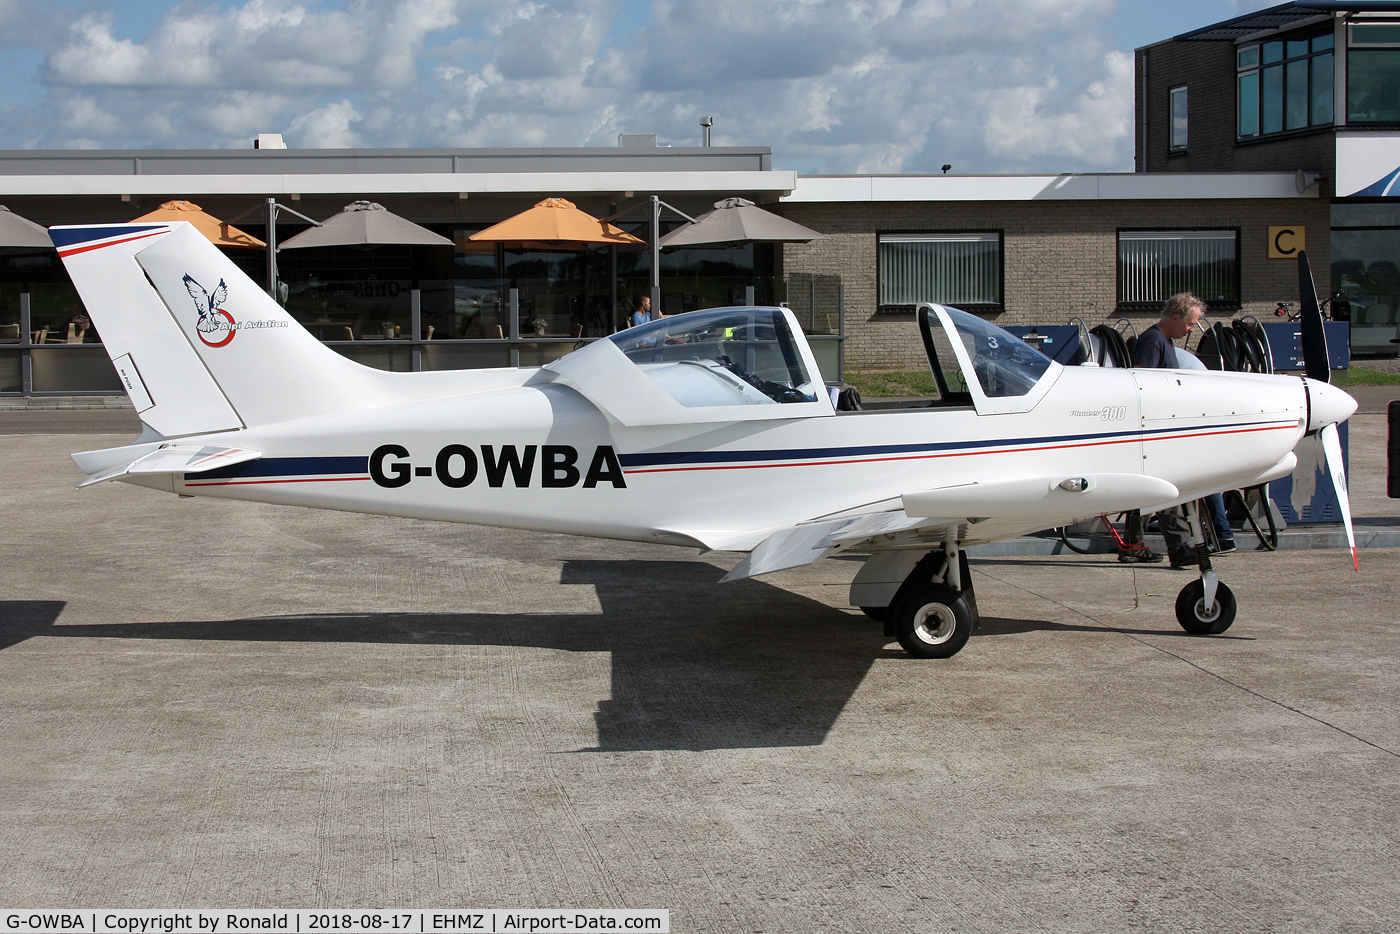 G-OWBA, 2013 Alpi Aviation Pioneer 300 C/N LAA 330-15155, at ehmz